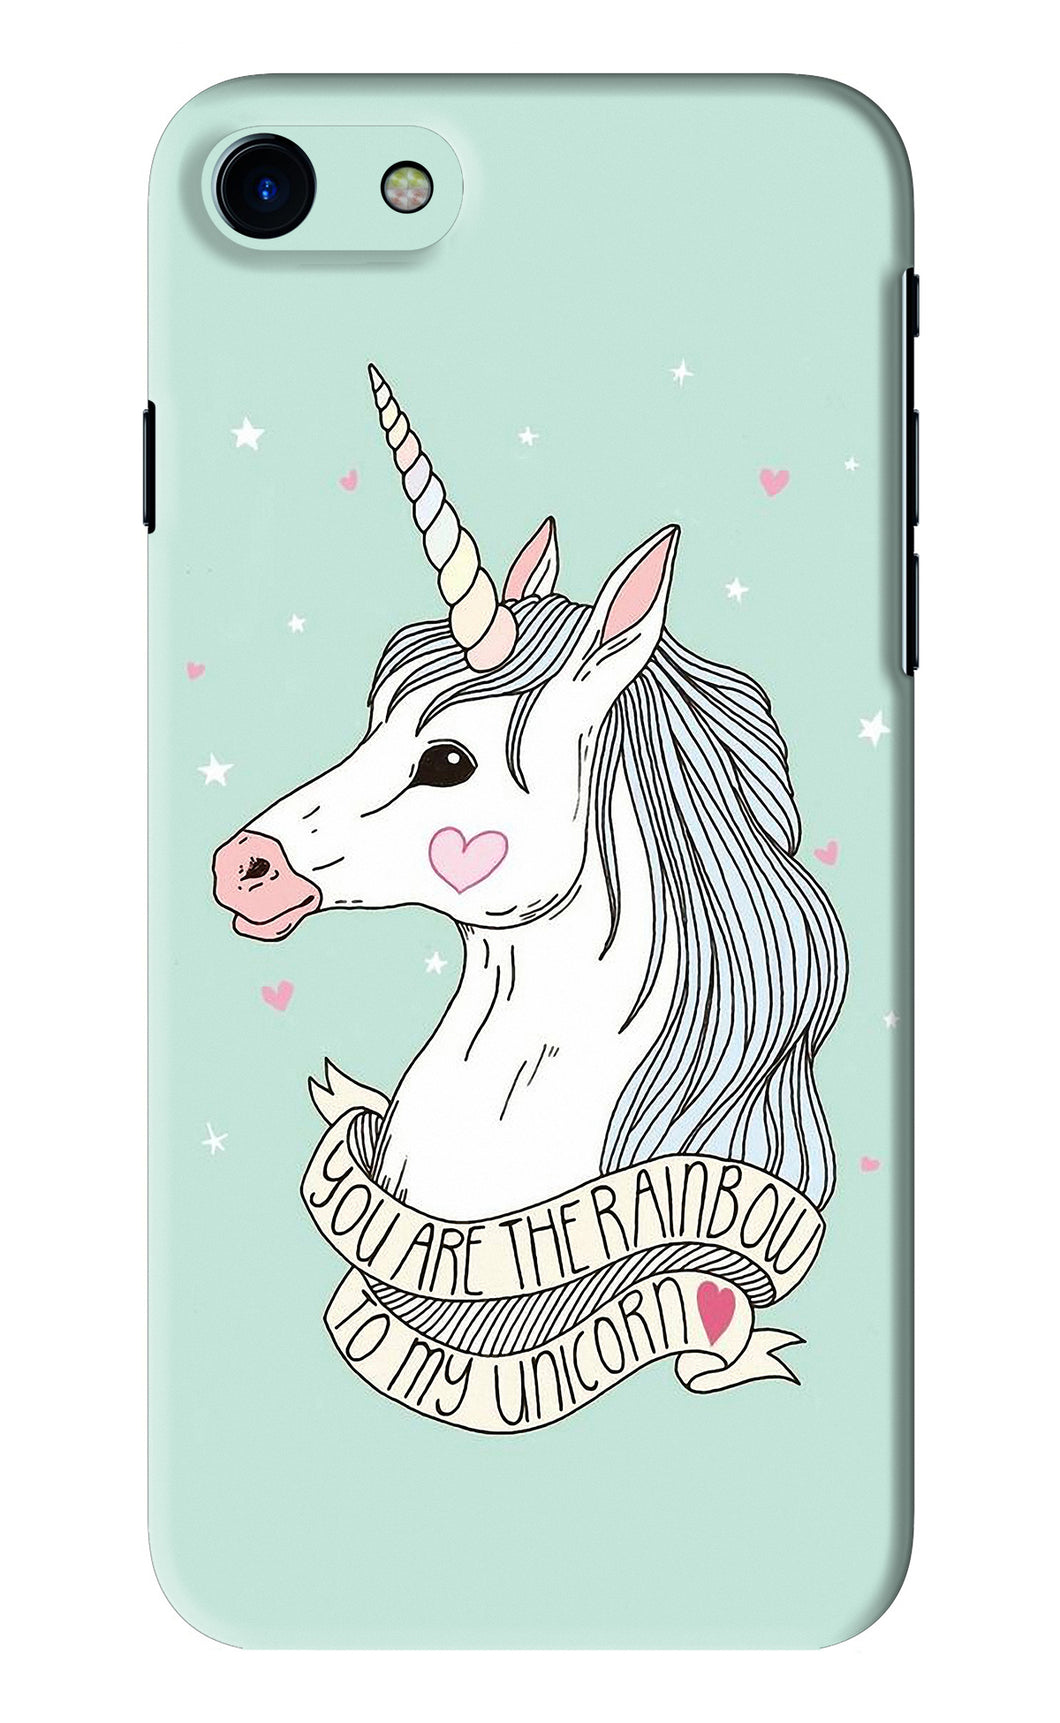 Unicorn Wallpaper iPhone 7 Back Skin Wrap